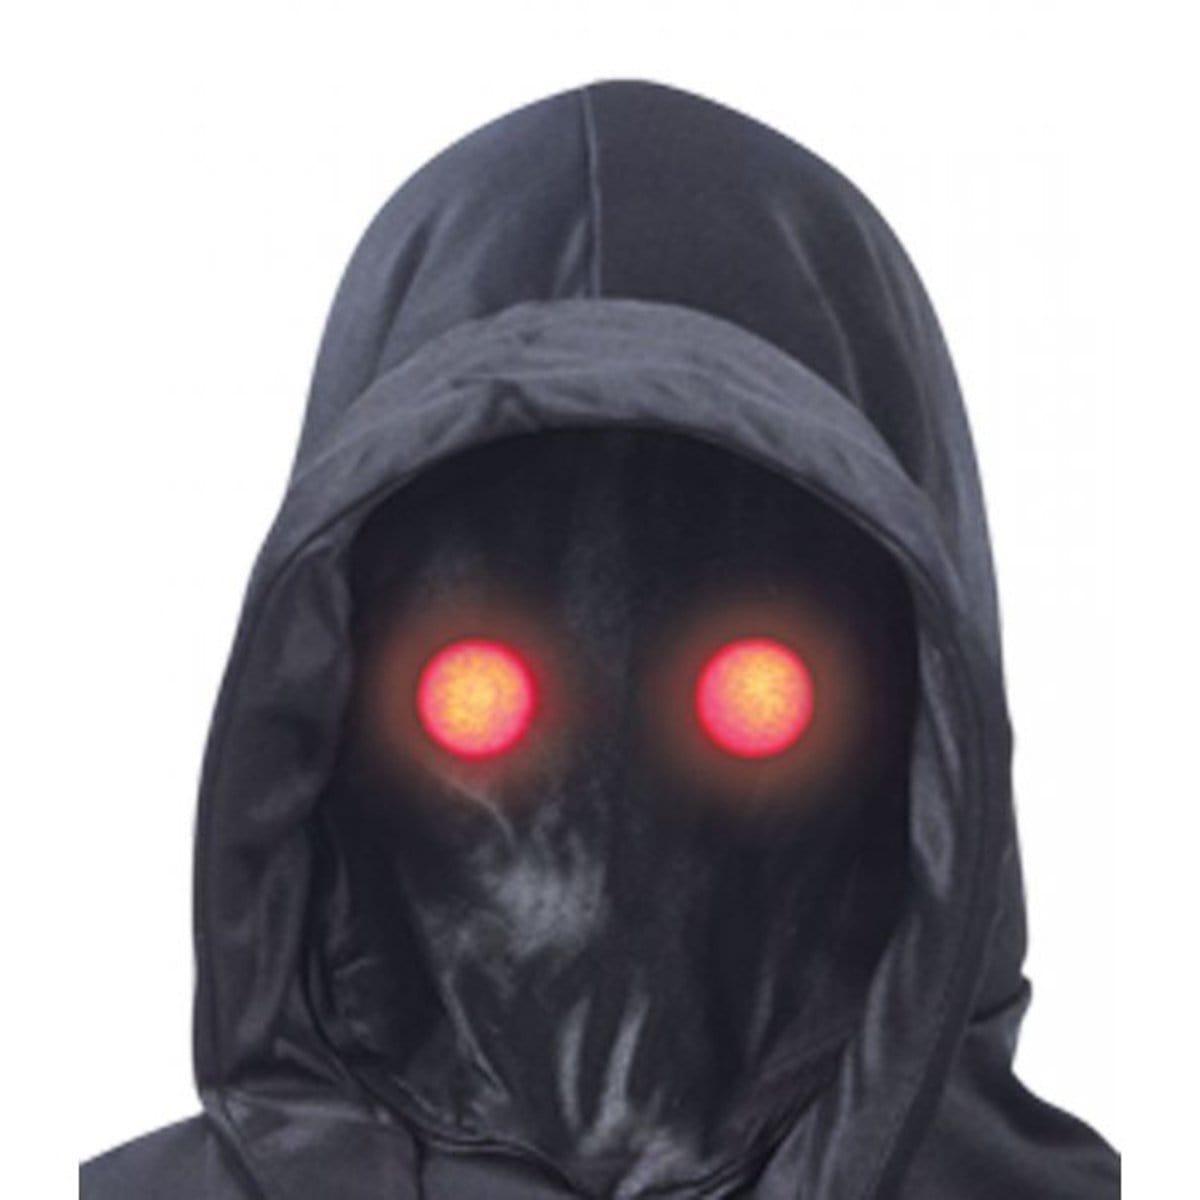 Grim Reaper Deluxe Costume for Kids